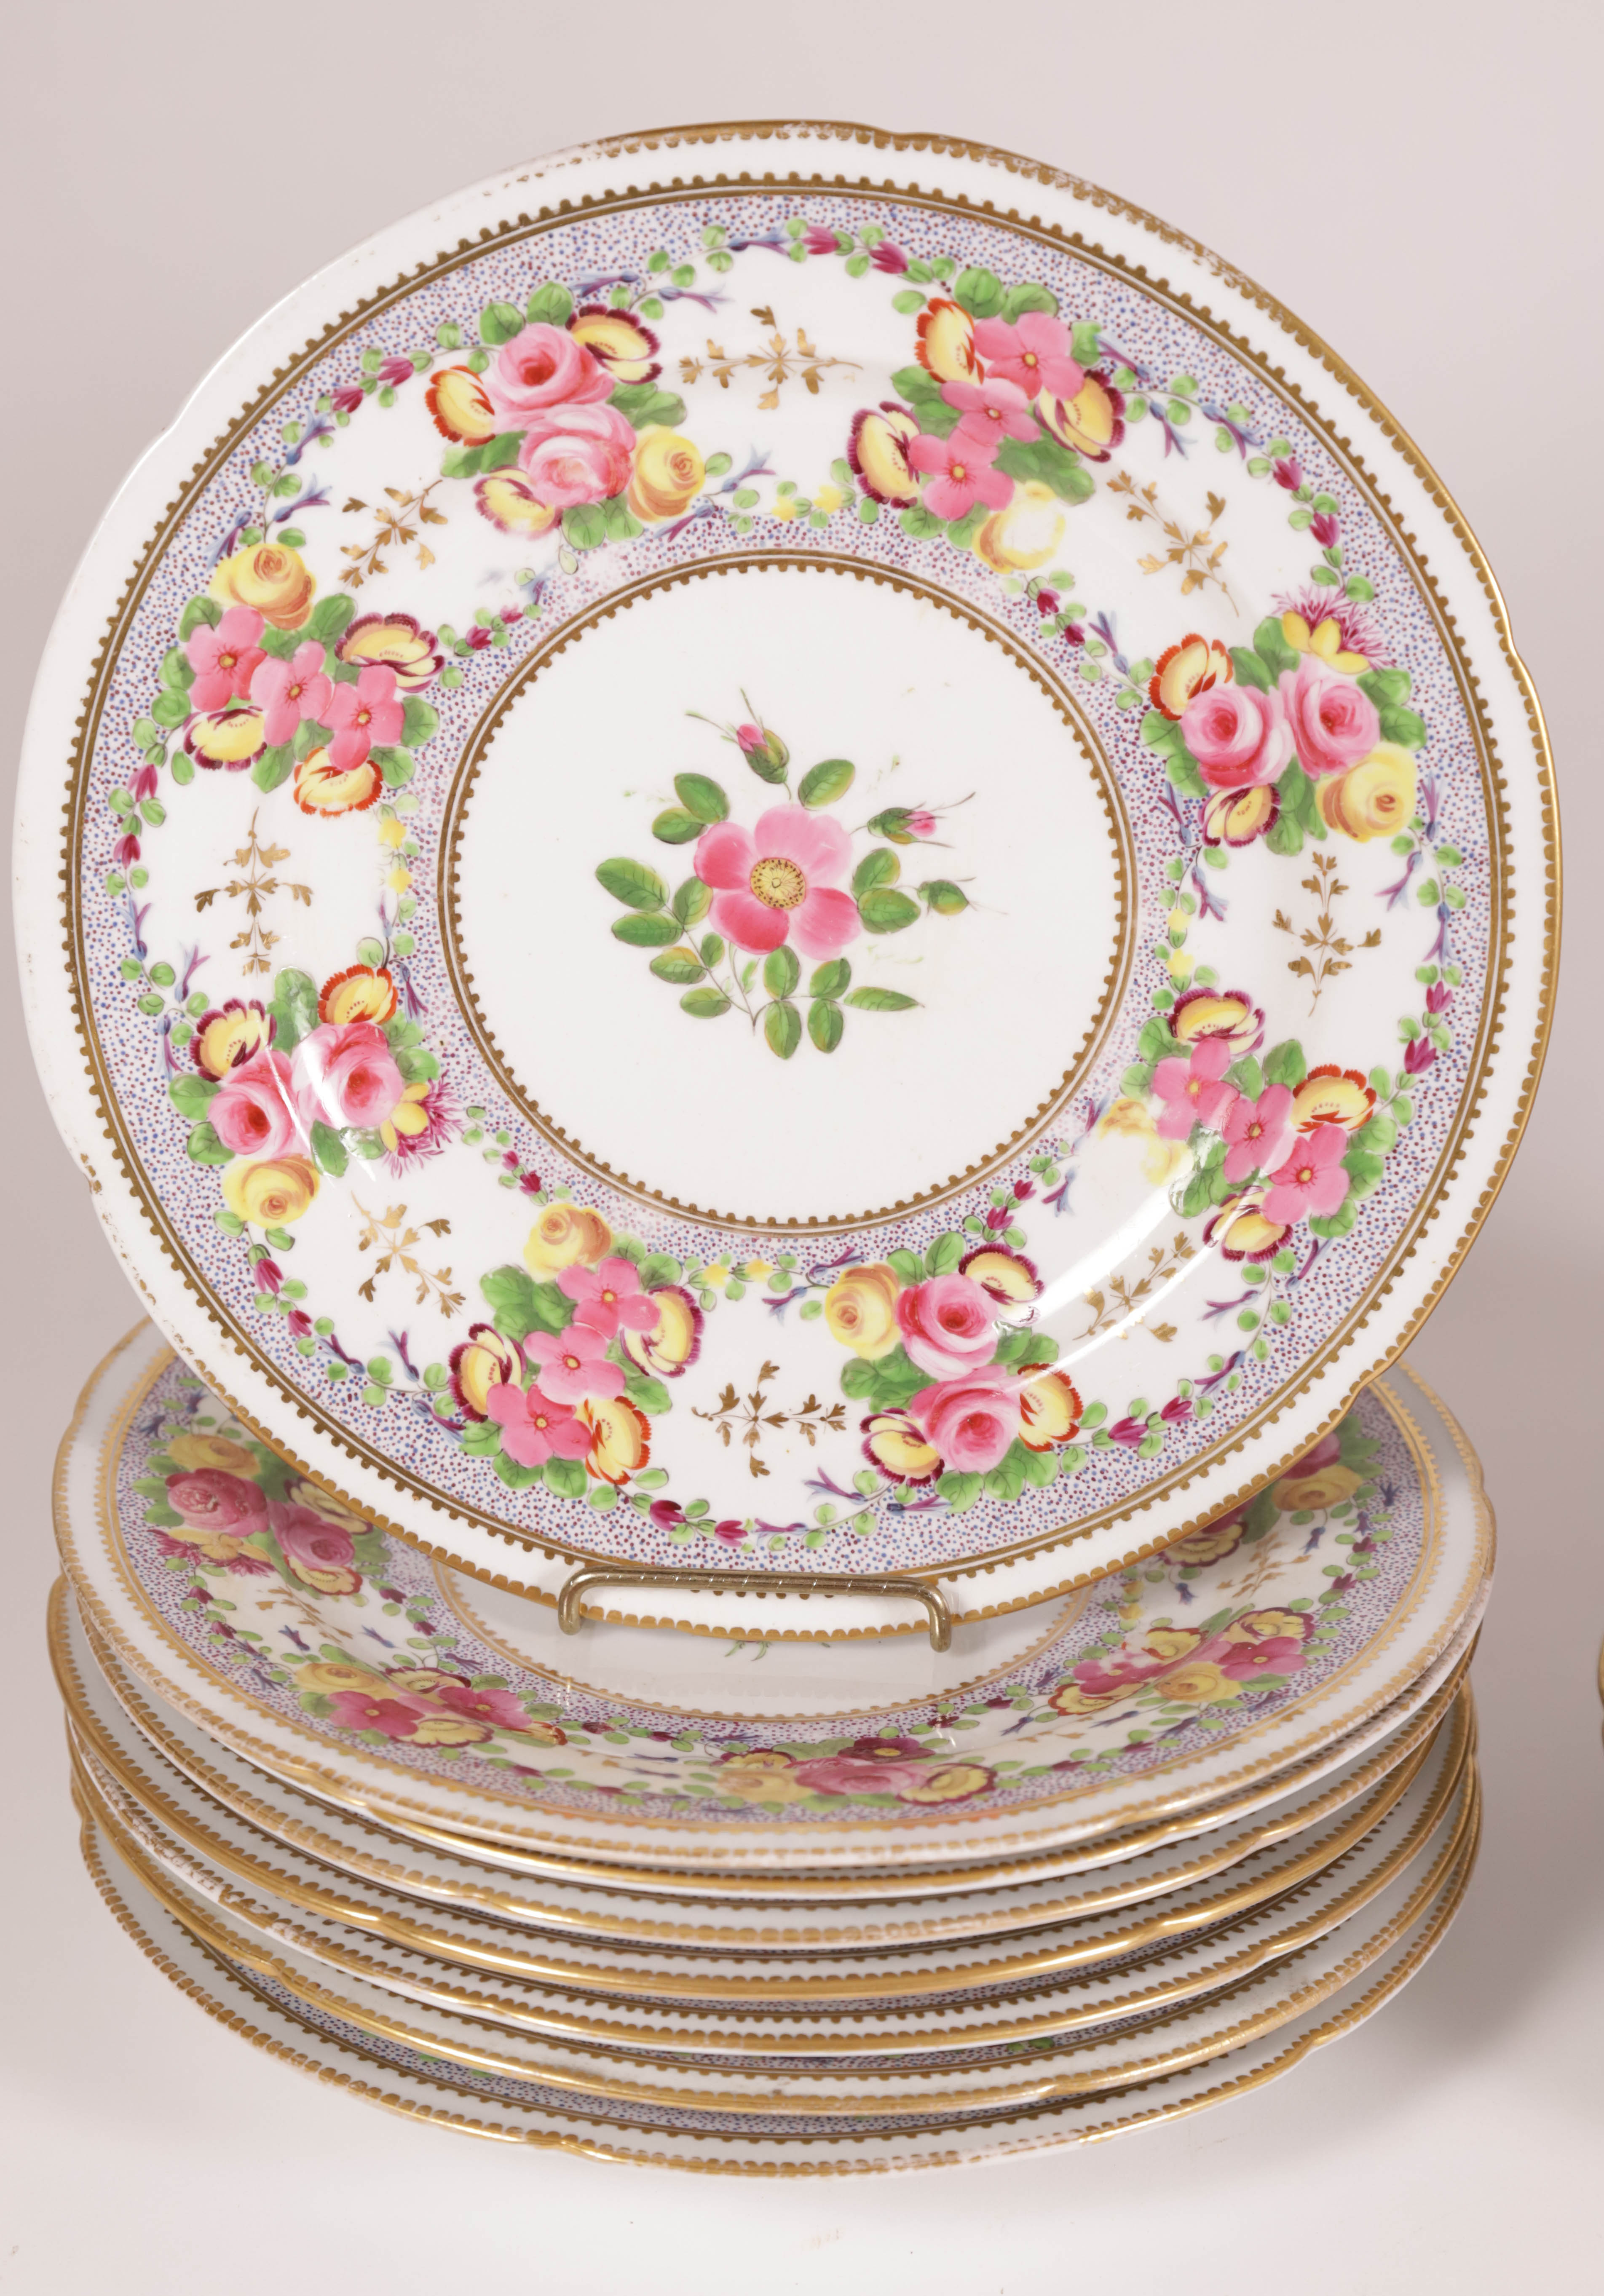 Set of 8 Old Paris Porcelain Dinner Plates and 6 Soup Plates, 19th Century